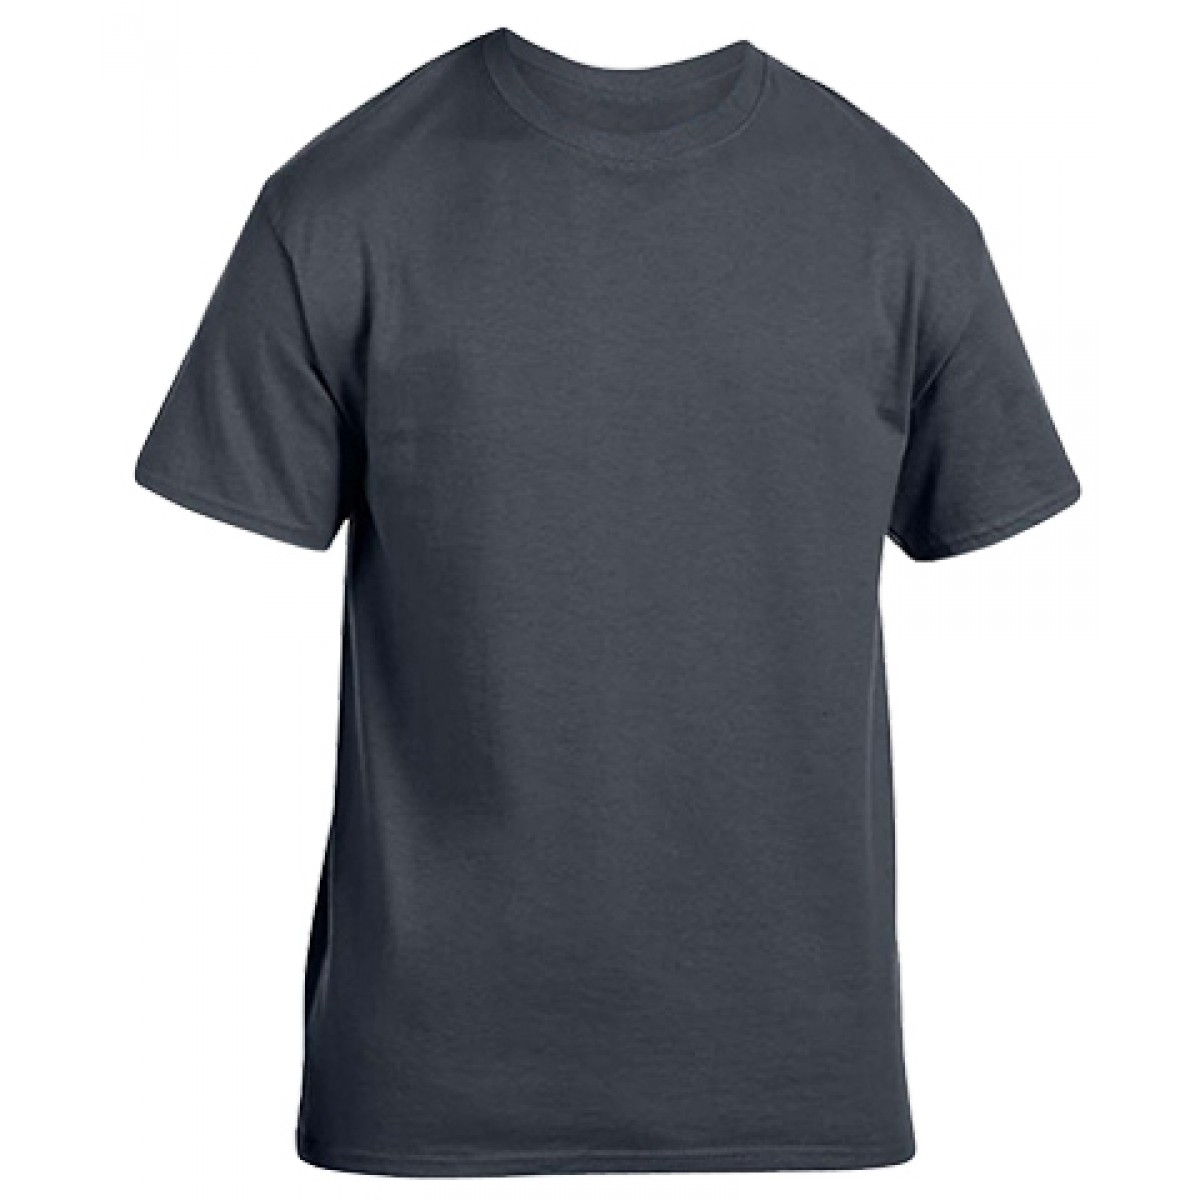 Cotton Short Sleeve T-Shirt / Dark Heather -Heather Gray-2XL